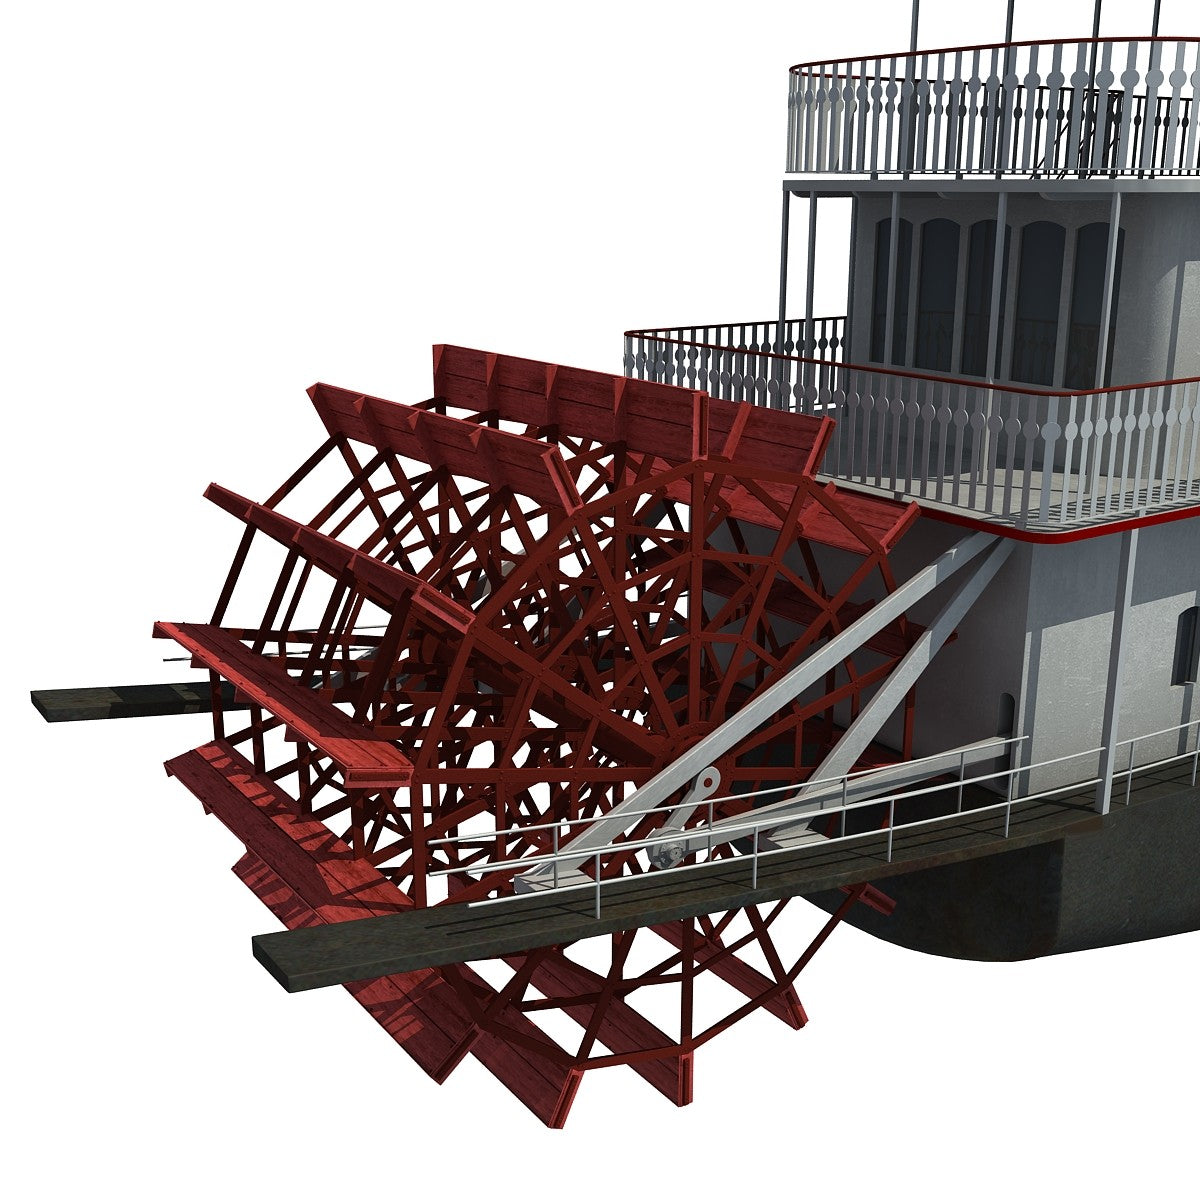 Steam Boat 3D Model